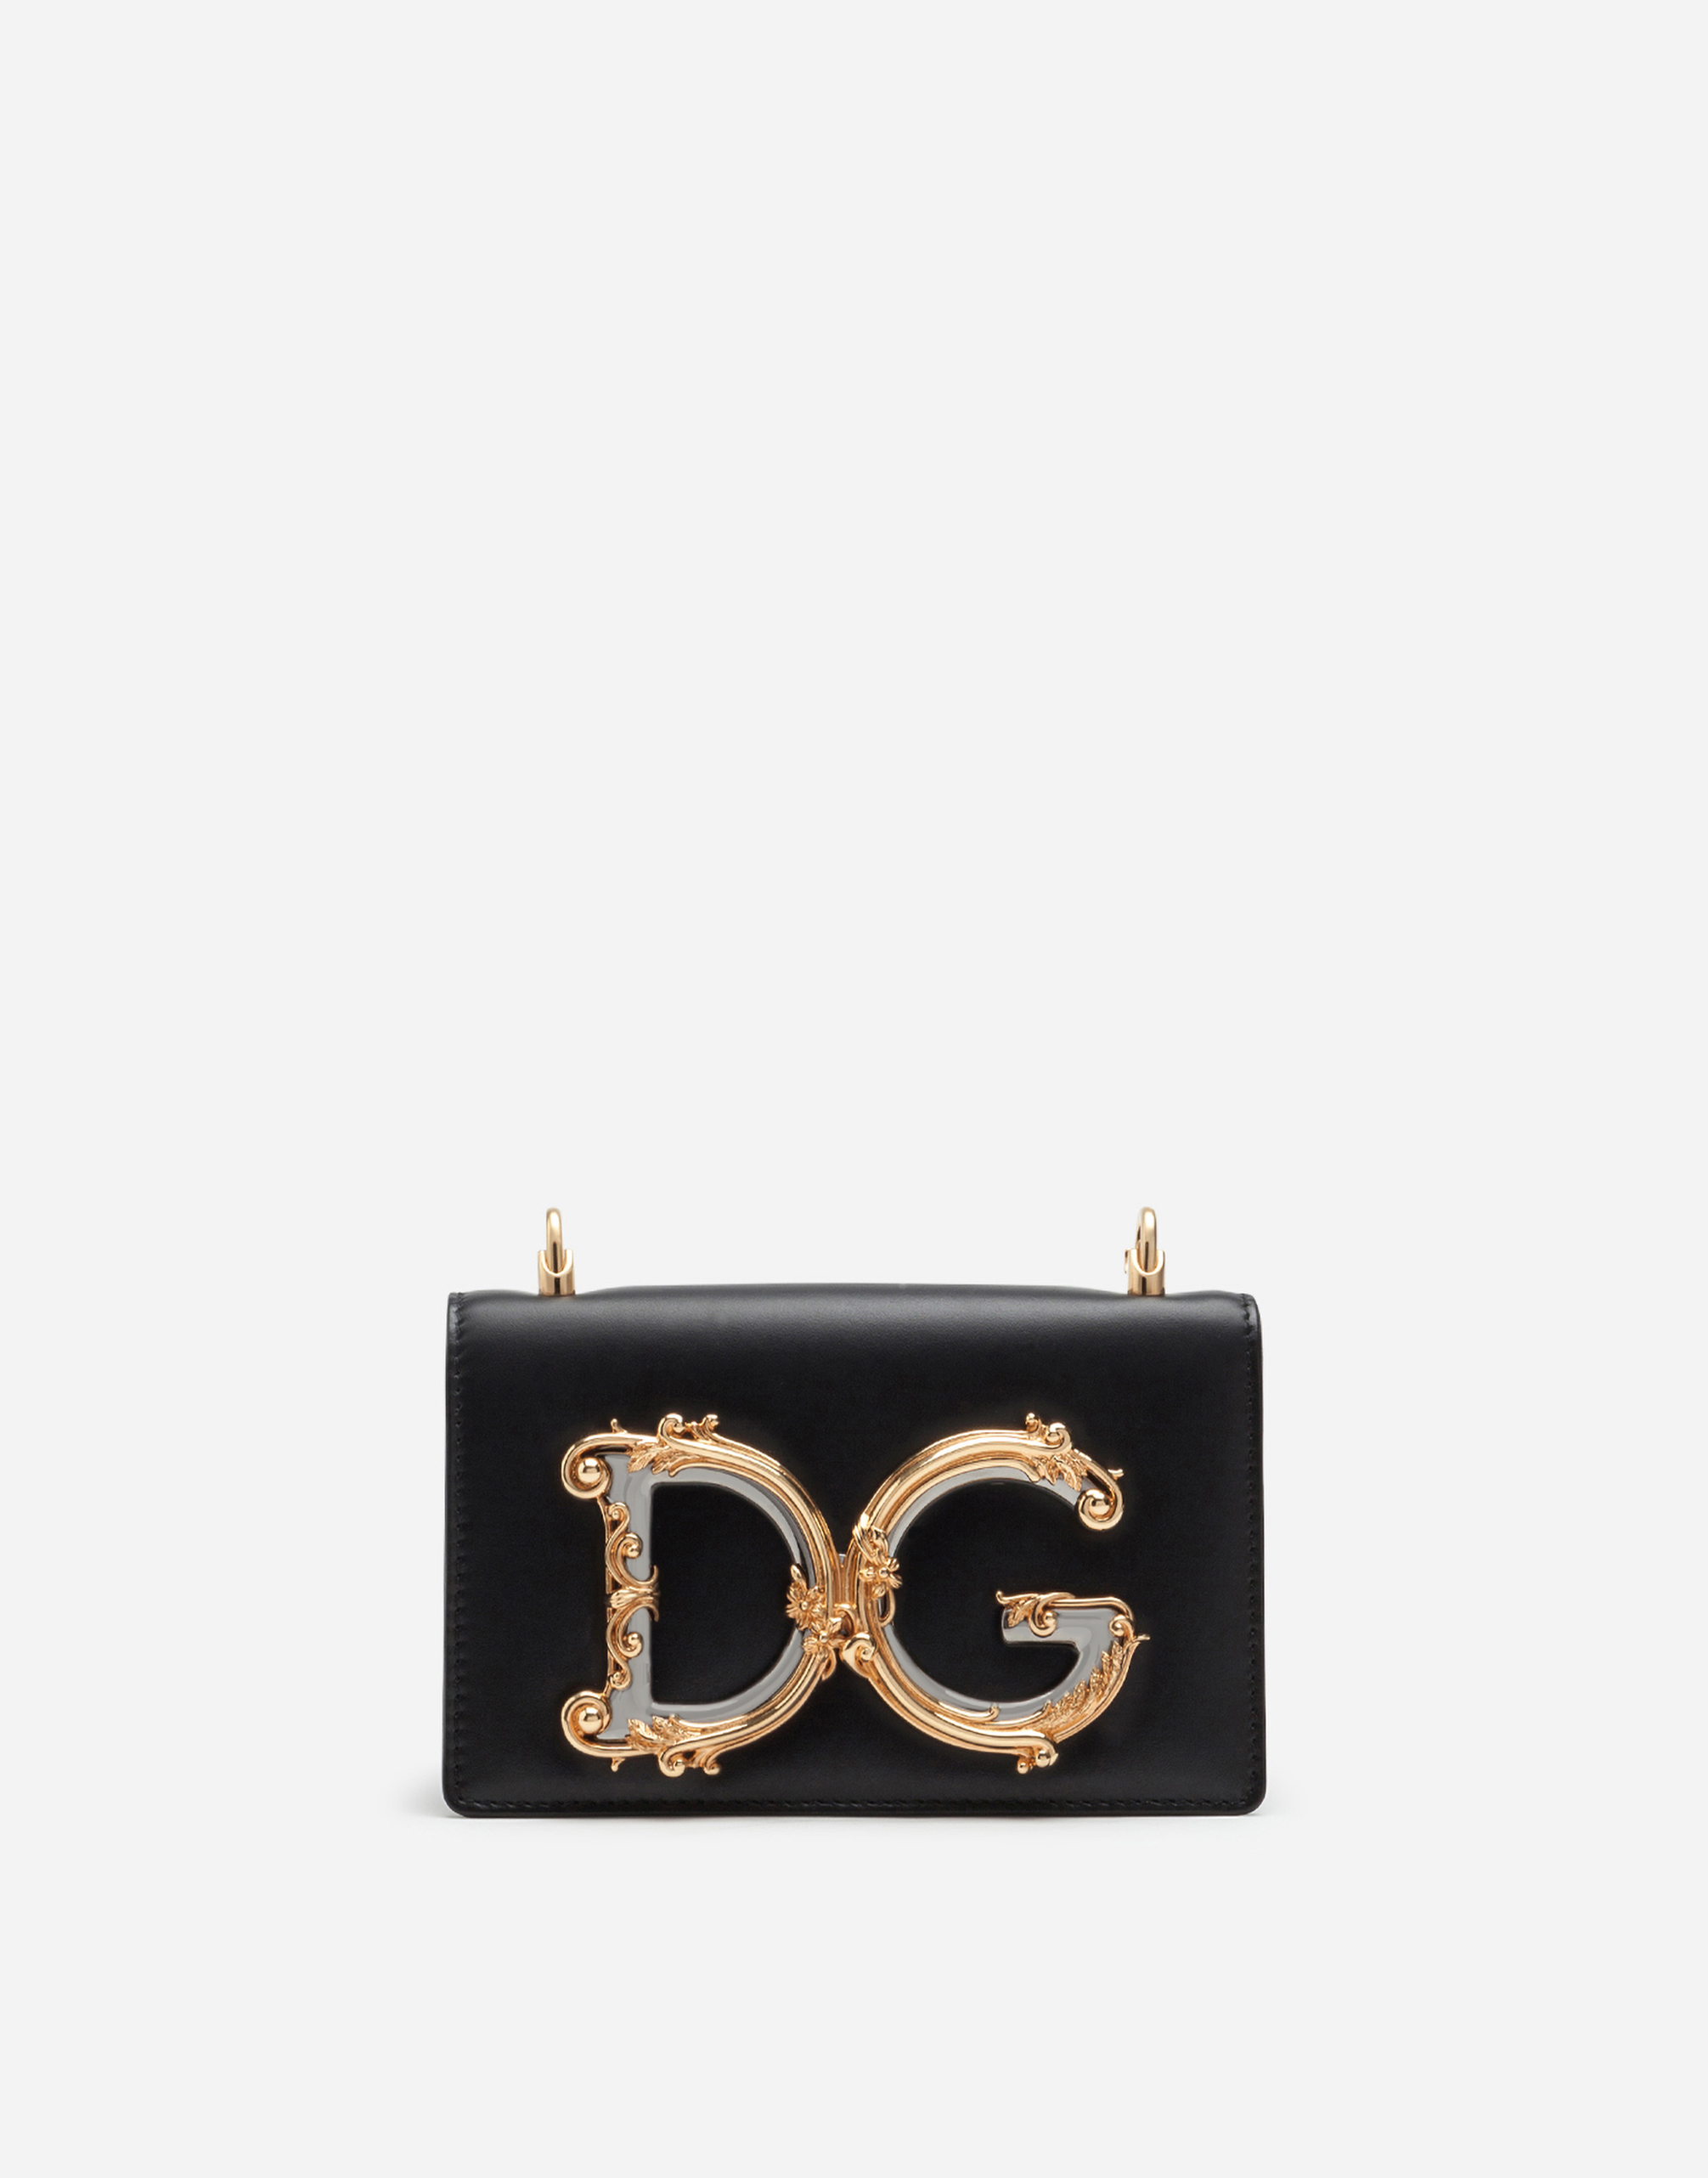 DG Girls mini bag in smooth calfskin in Black